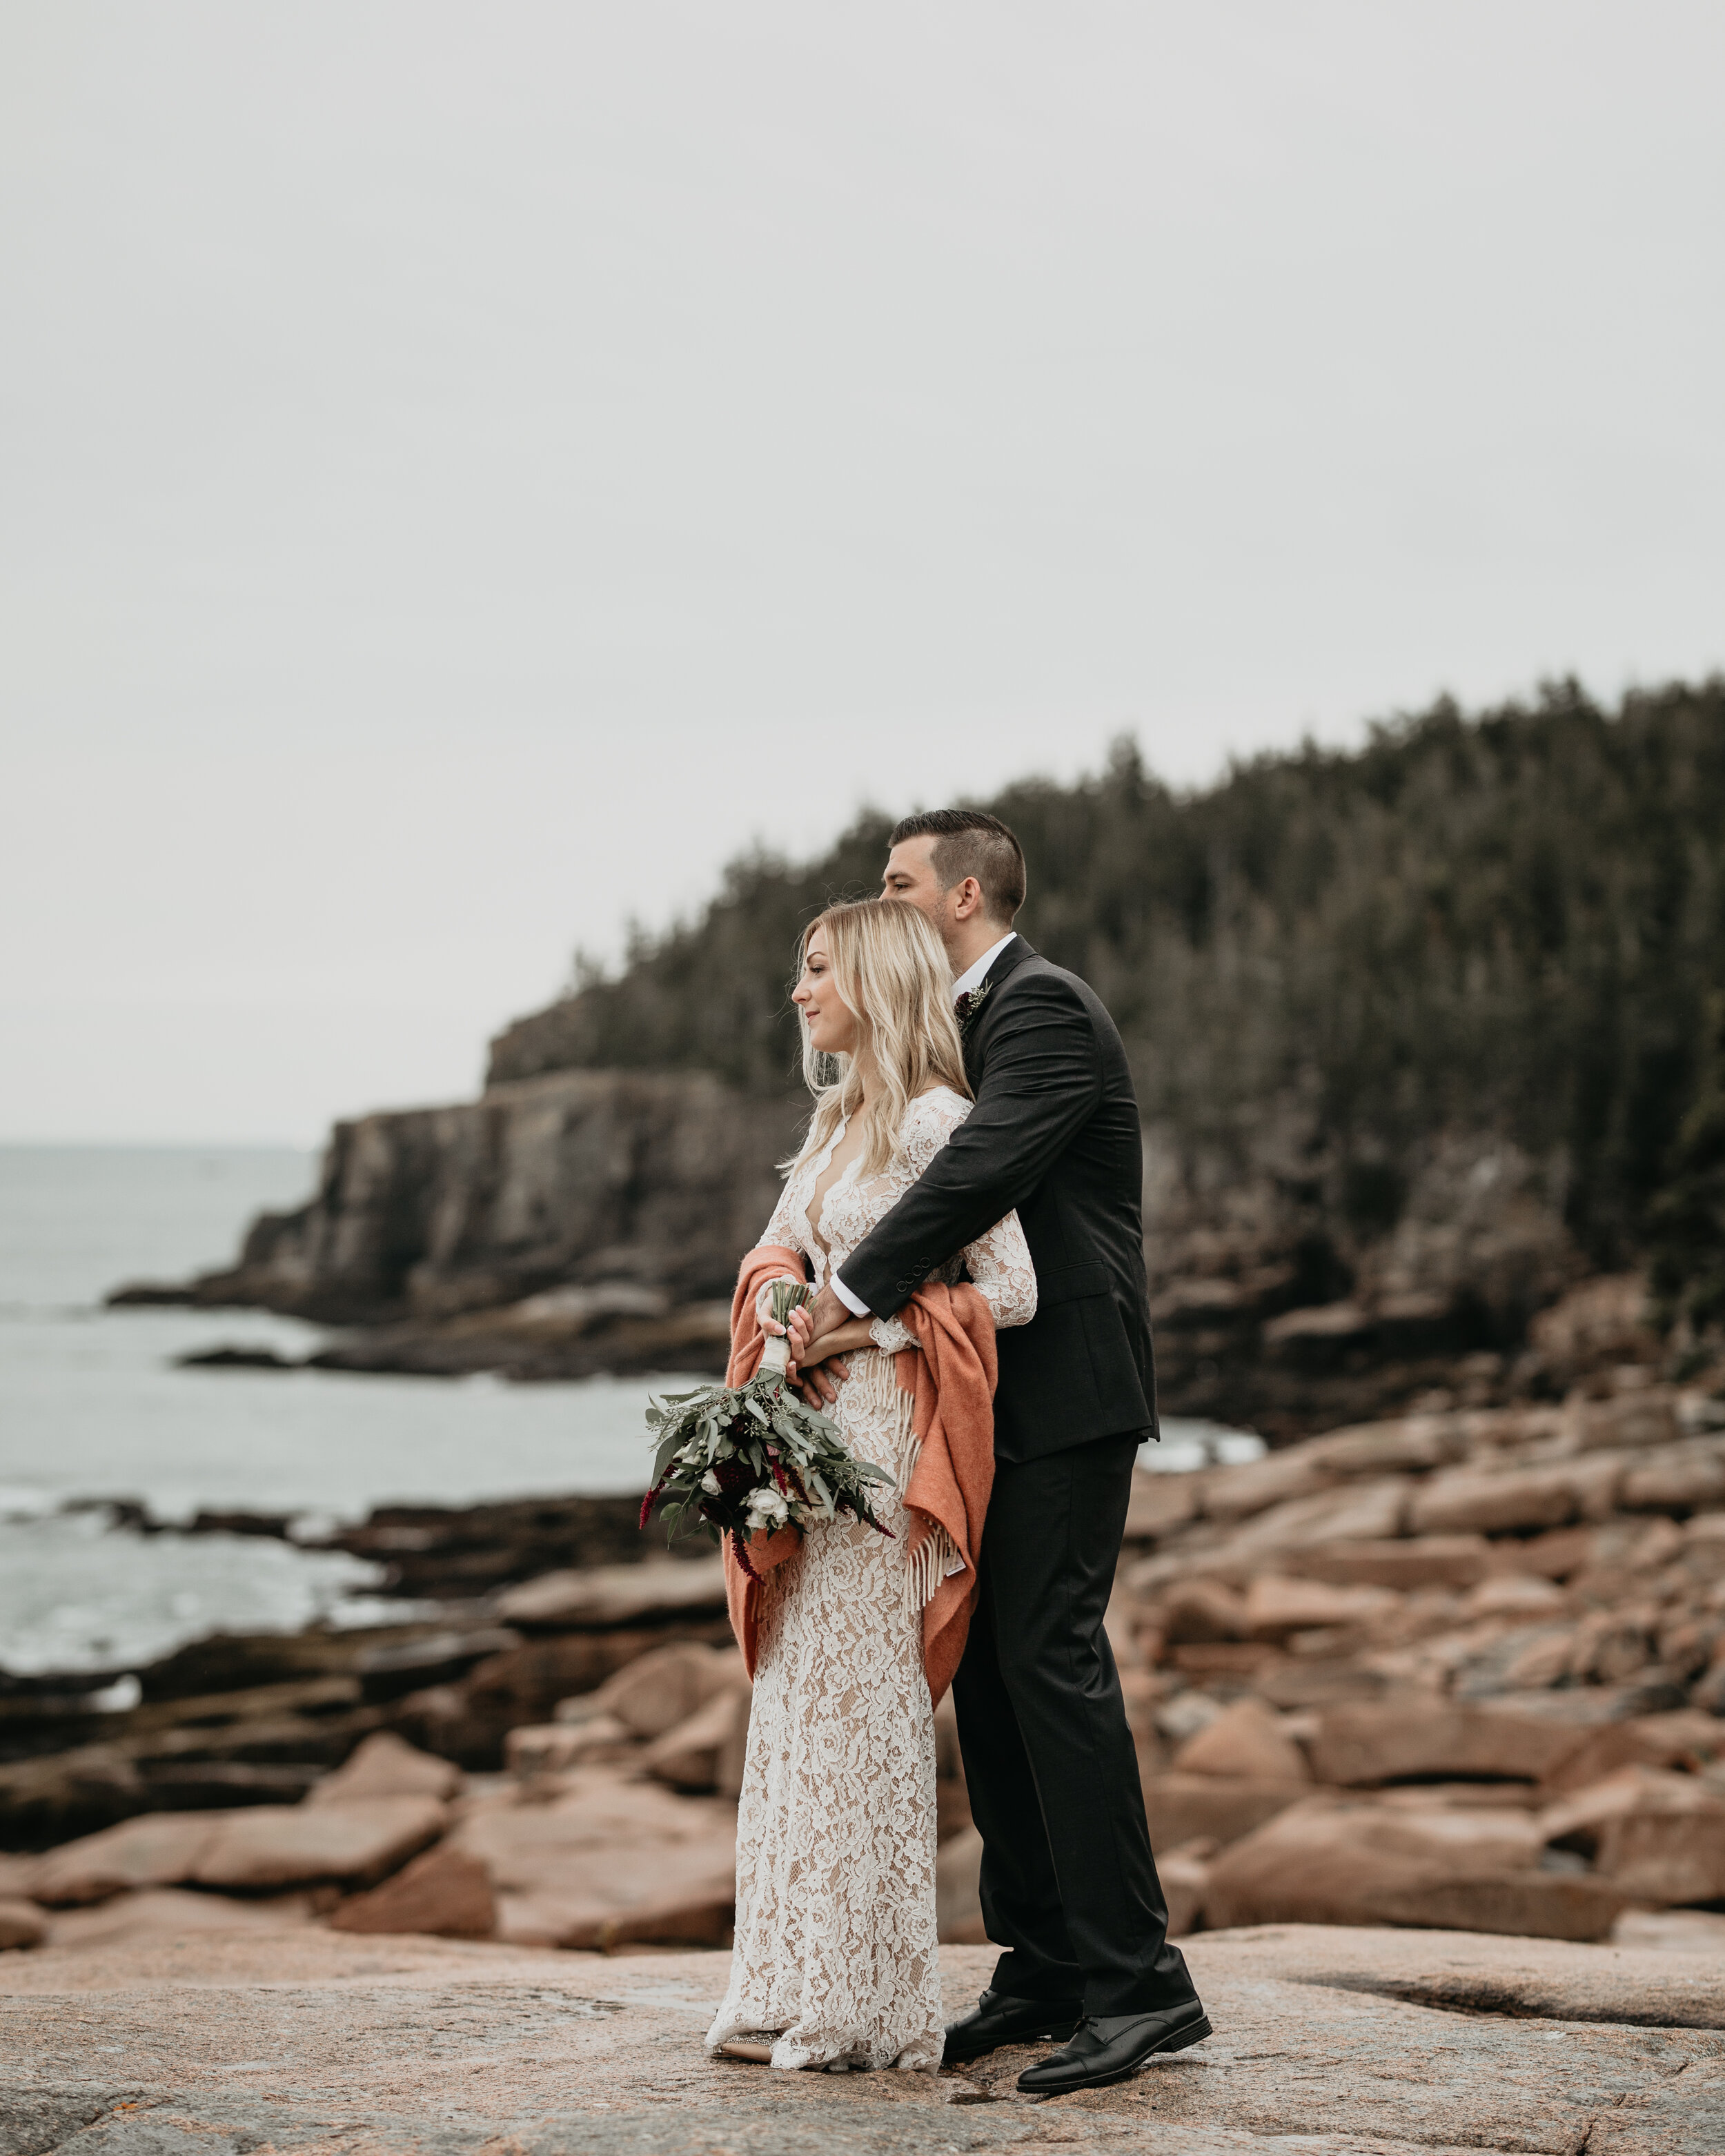 Nicole-Daacke-Photography-Acadia-national-park-elopement-photography-elopement-in-acadia-inspiration-maine-intimate-wedding-destination-elopement-photographer-rainy-day-maine-coast-bar-harbor-elopement-photography-156.jpg